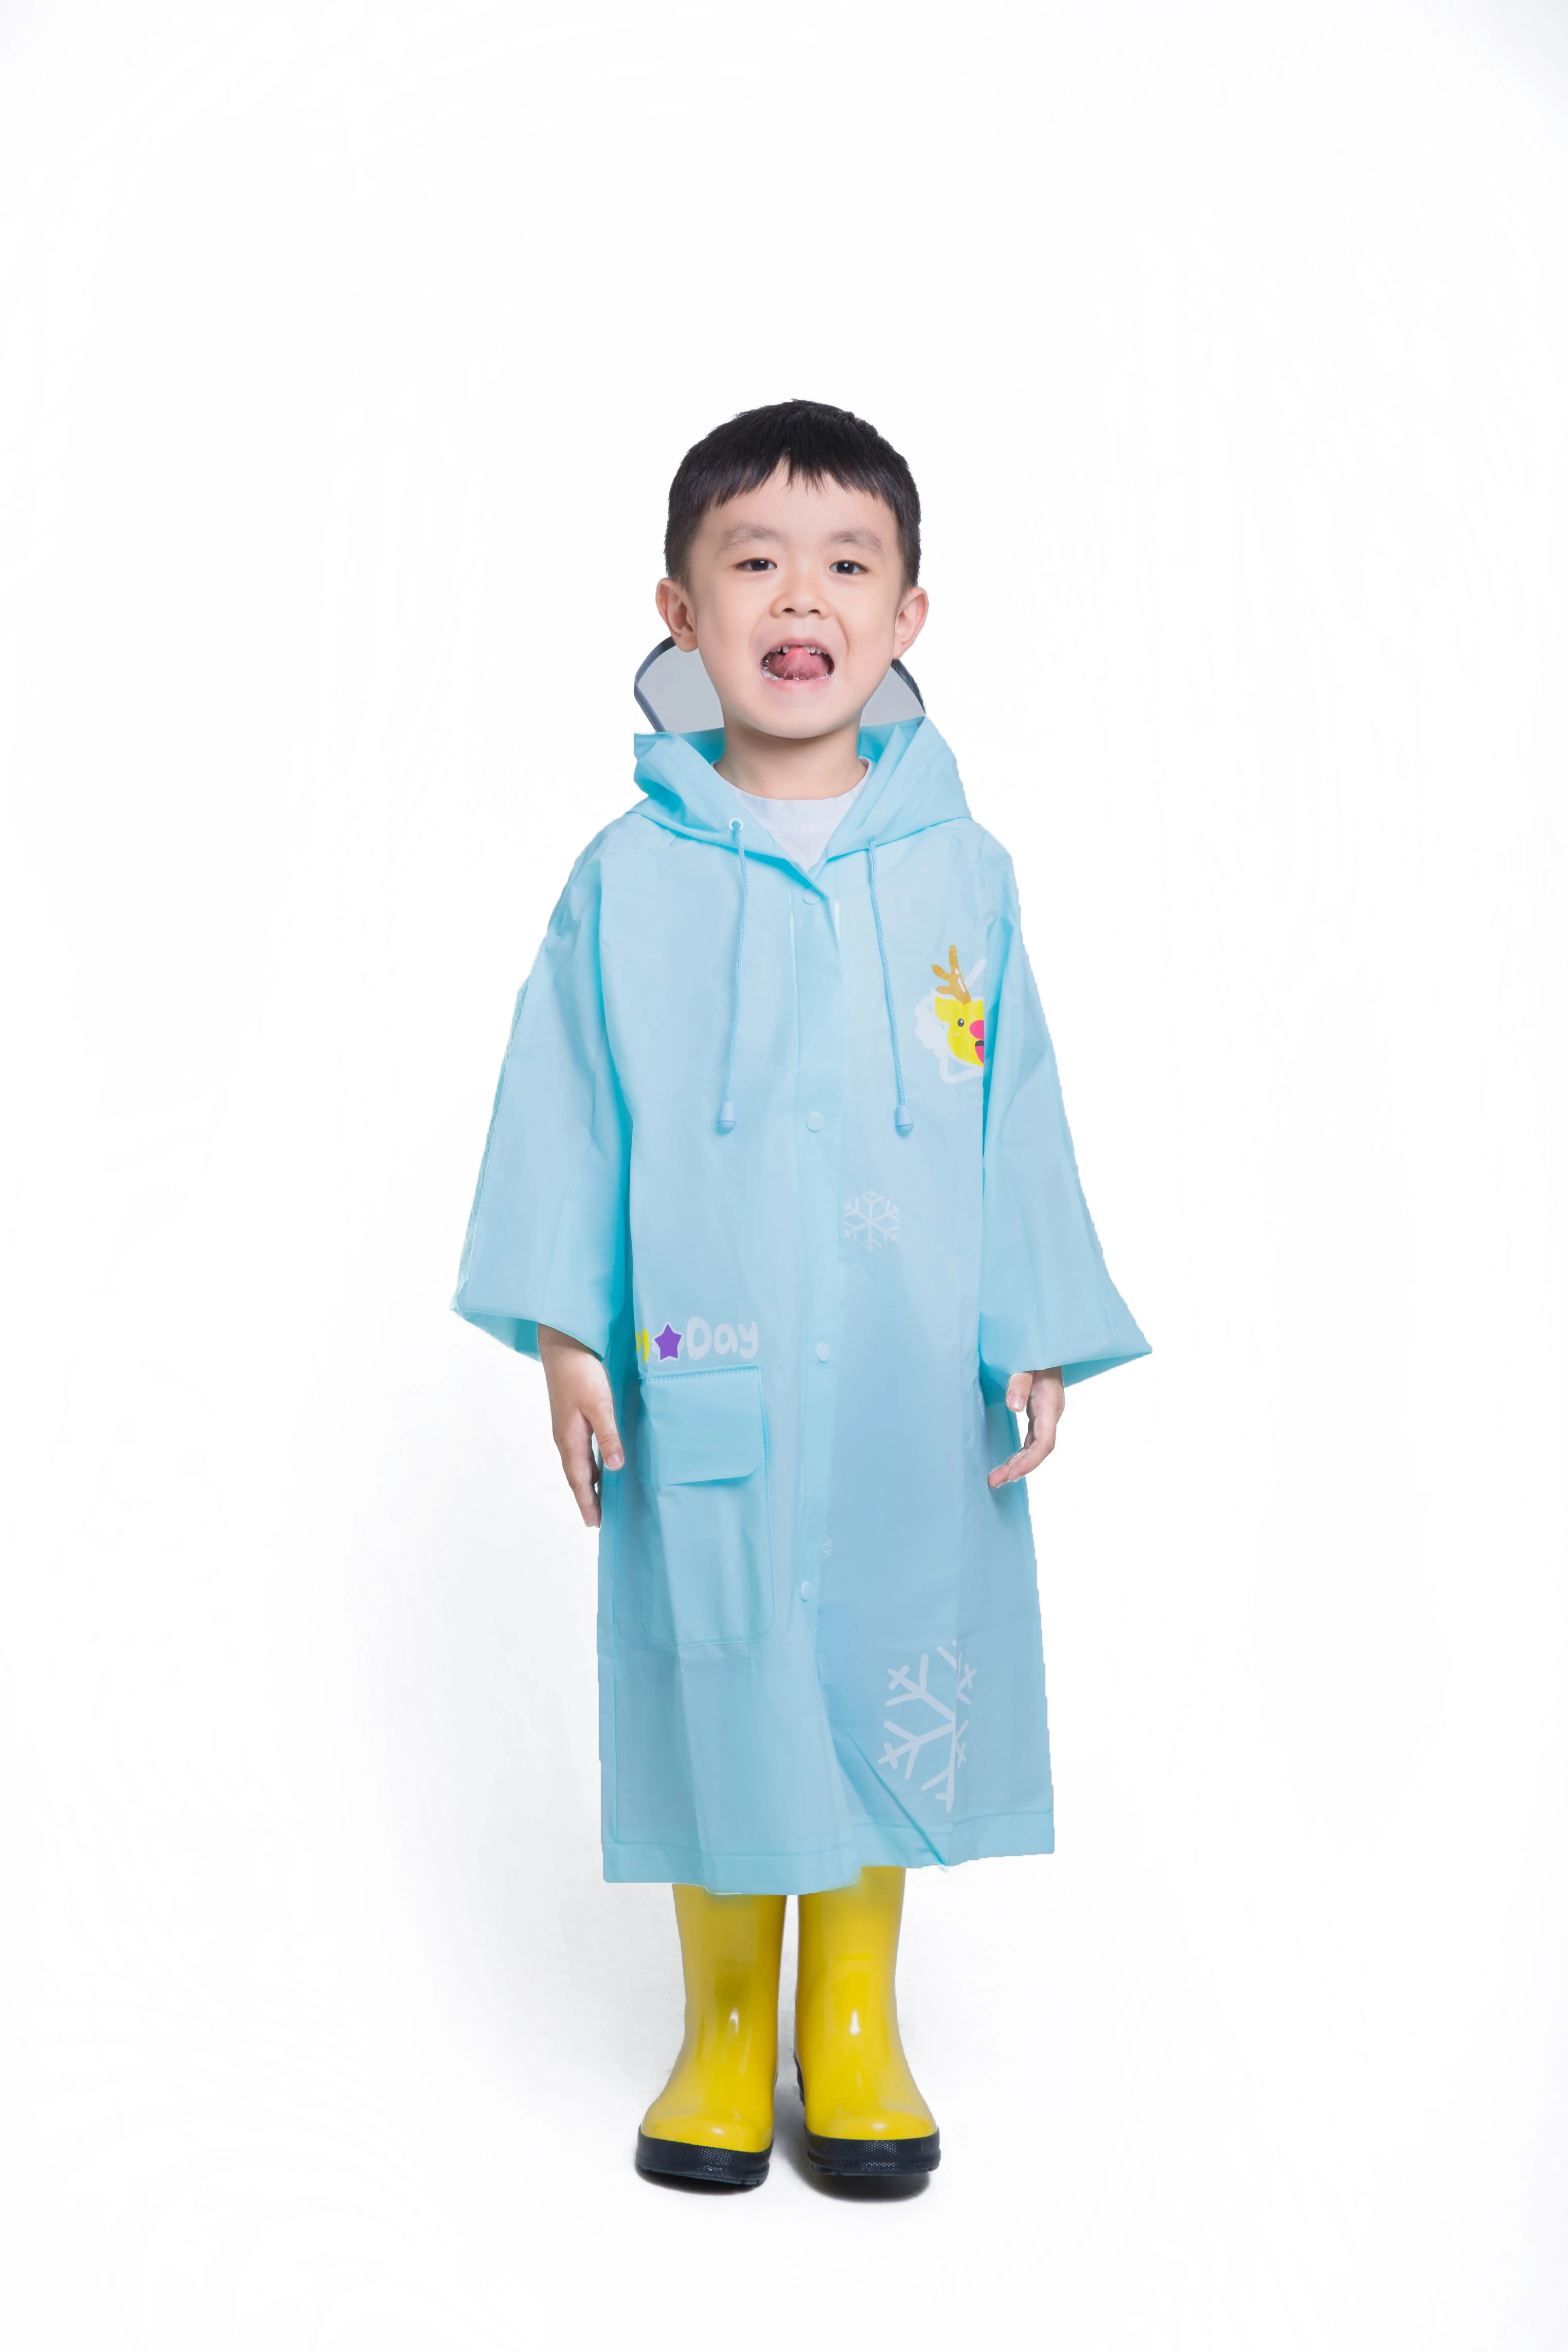 Raincoat Manufacturer Wholesale Rainsuit Kid Childrens Raincoat with Hoods Sleeved Poncho of Crius 9103